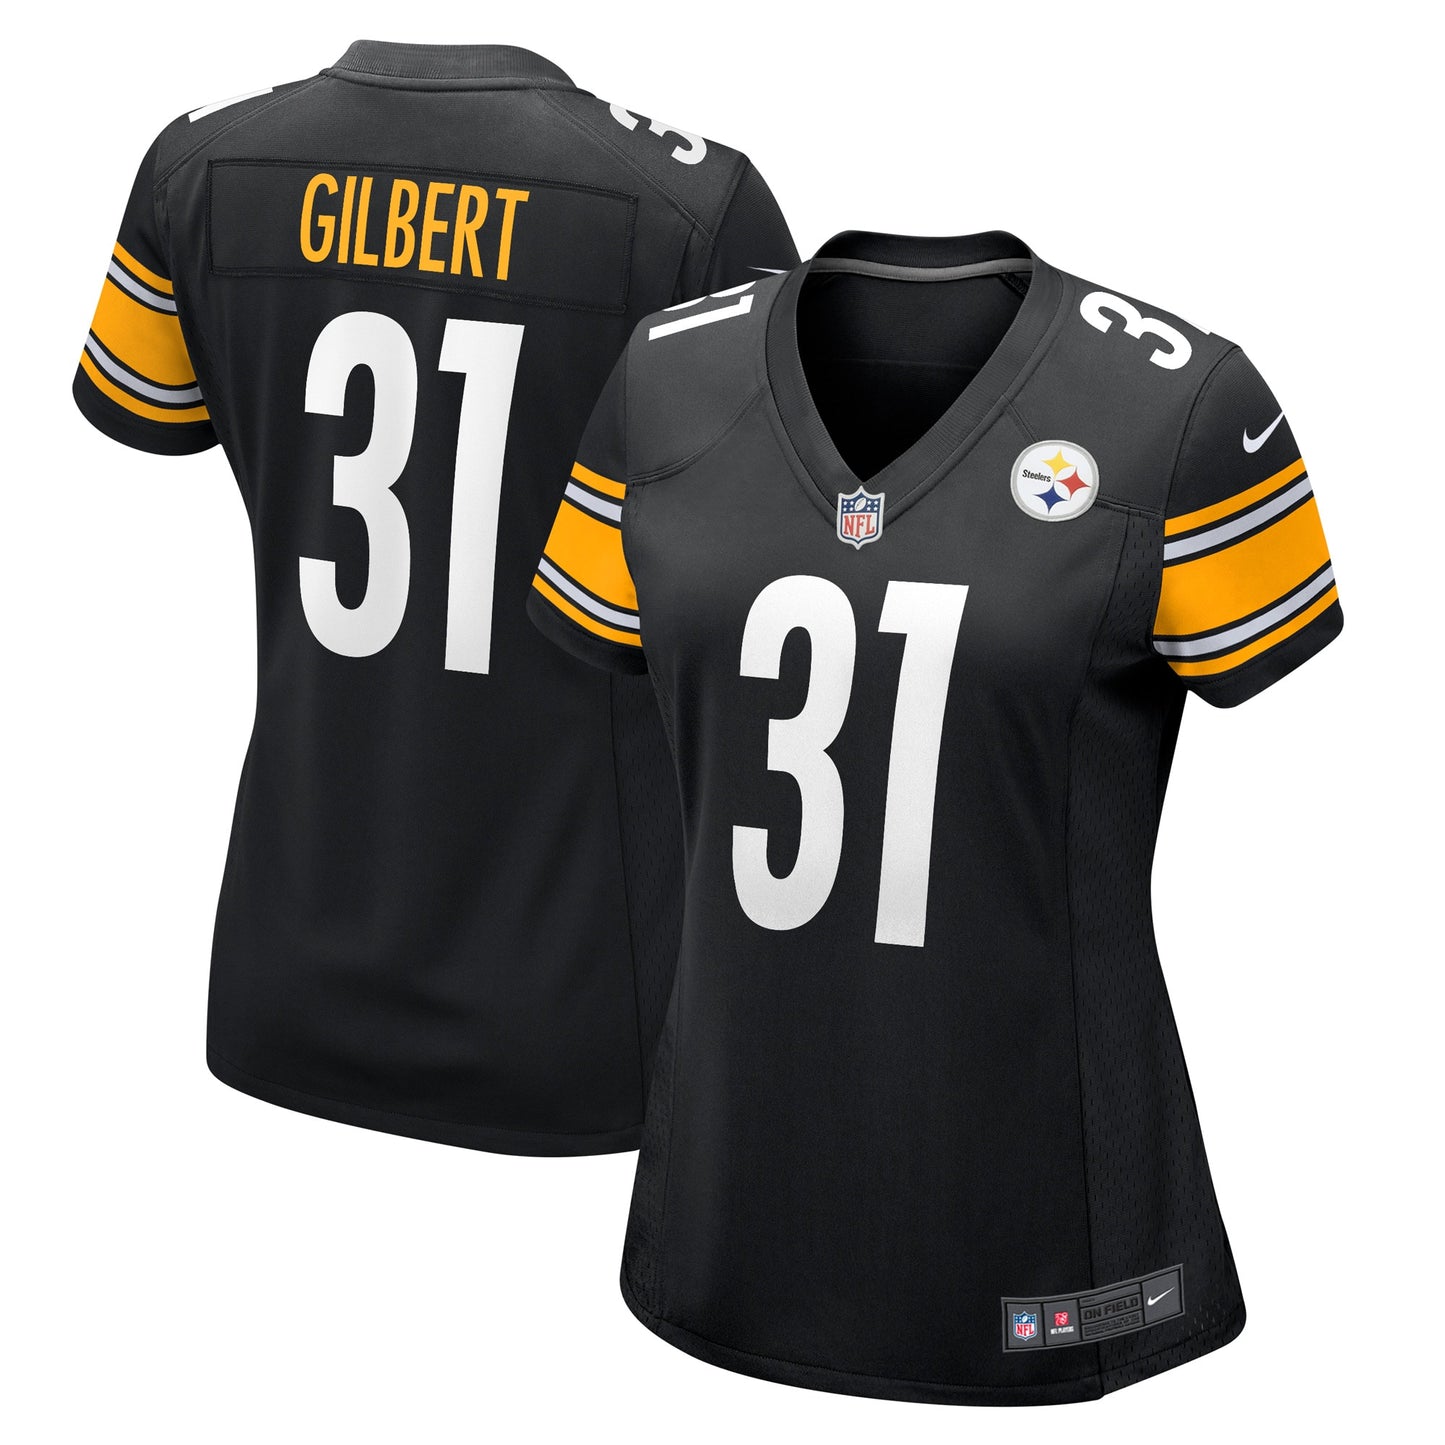 Mark Gilbert Pittsburgh Steelers Nike Women's Game Player Jersey - Black